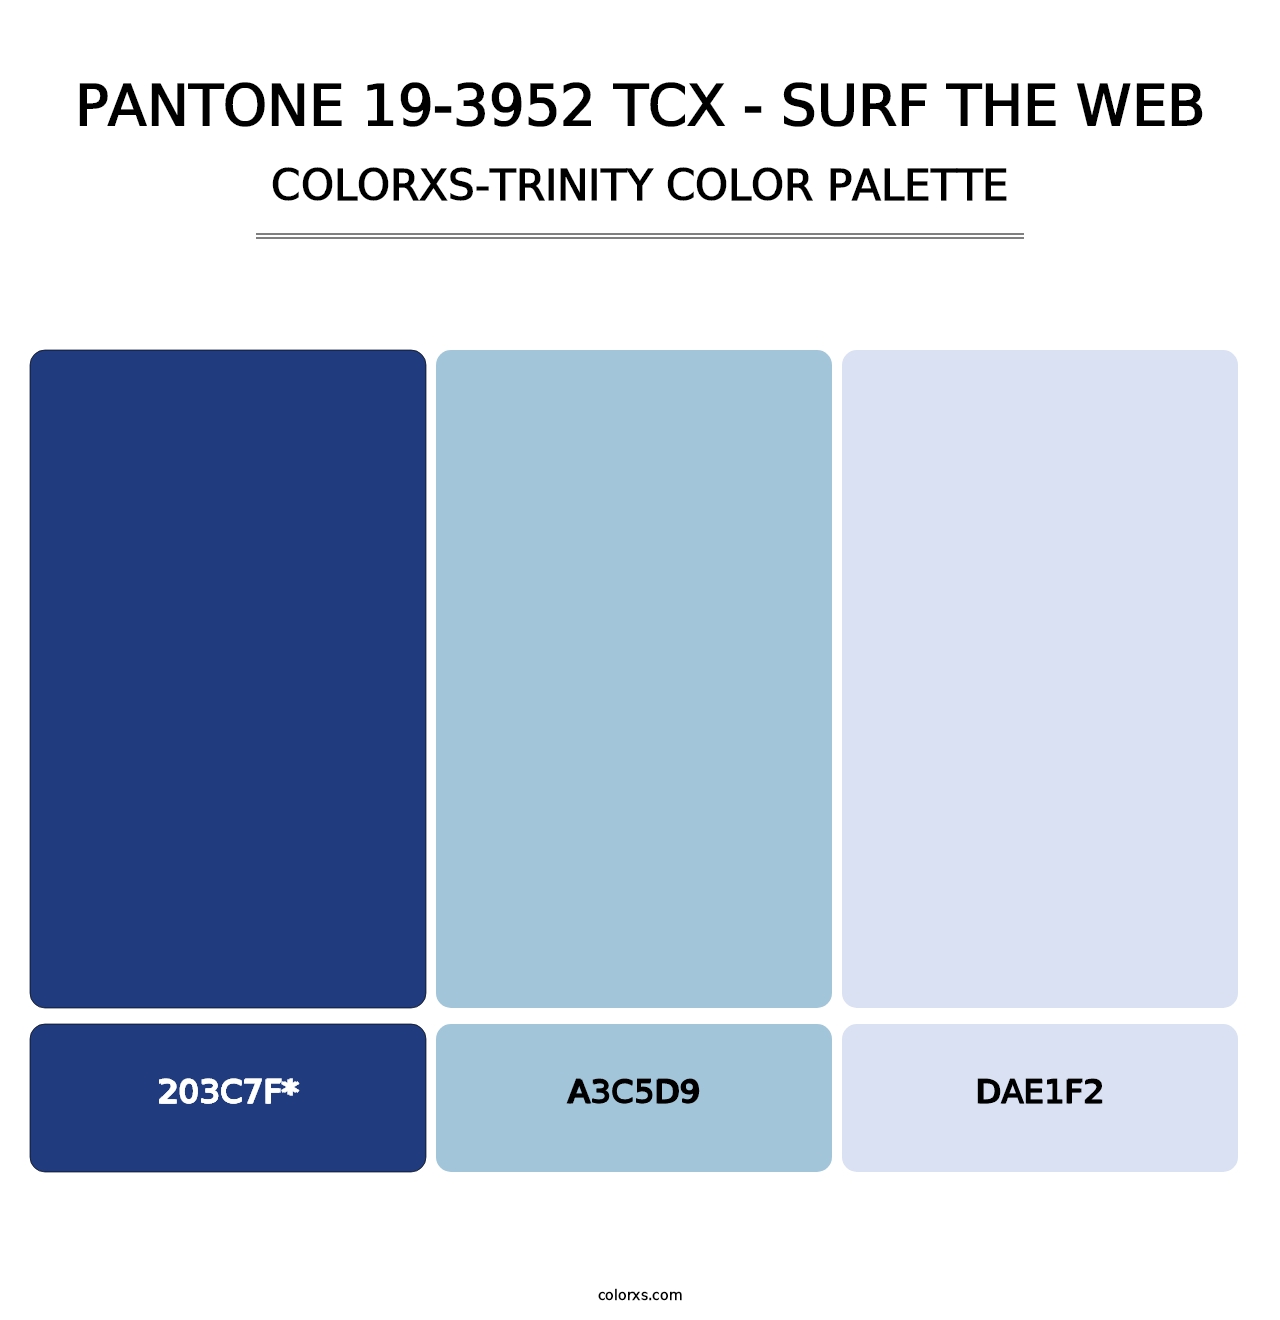 PANTONE 19-3952 TCX - Surf the Web - Colorxs Trinity Palette